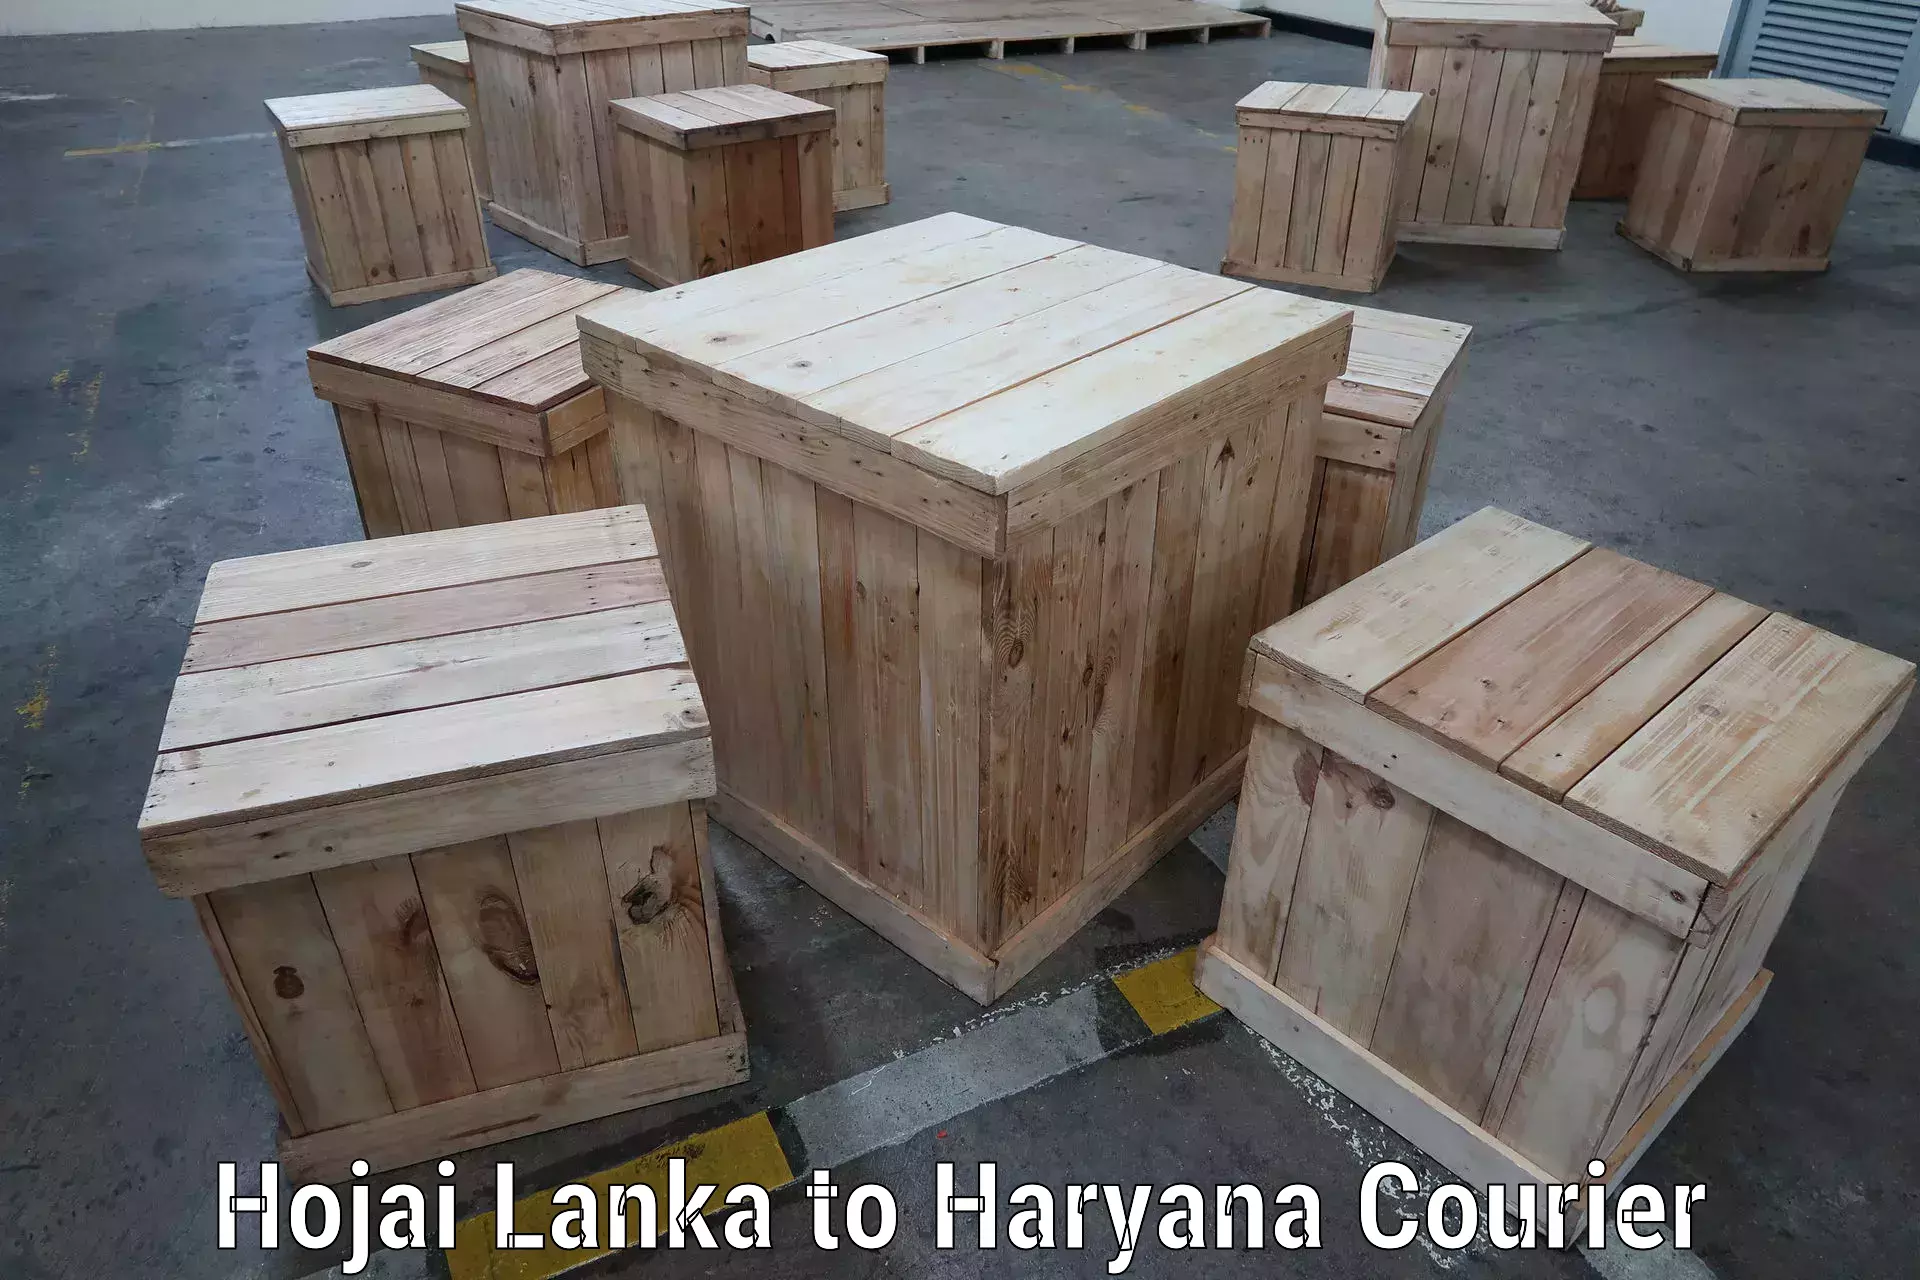 Cargo delivery service Hojai Lanka to Panchkula